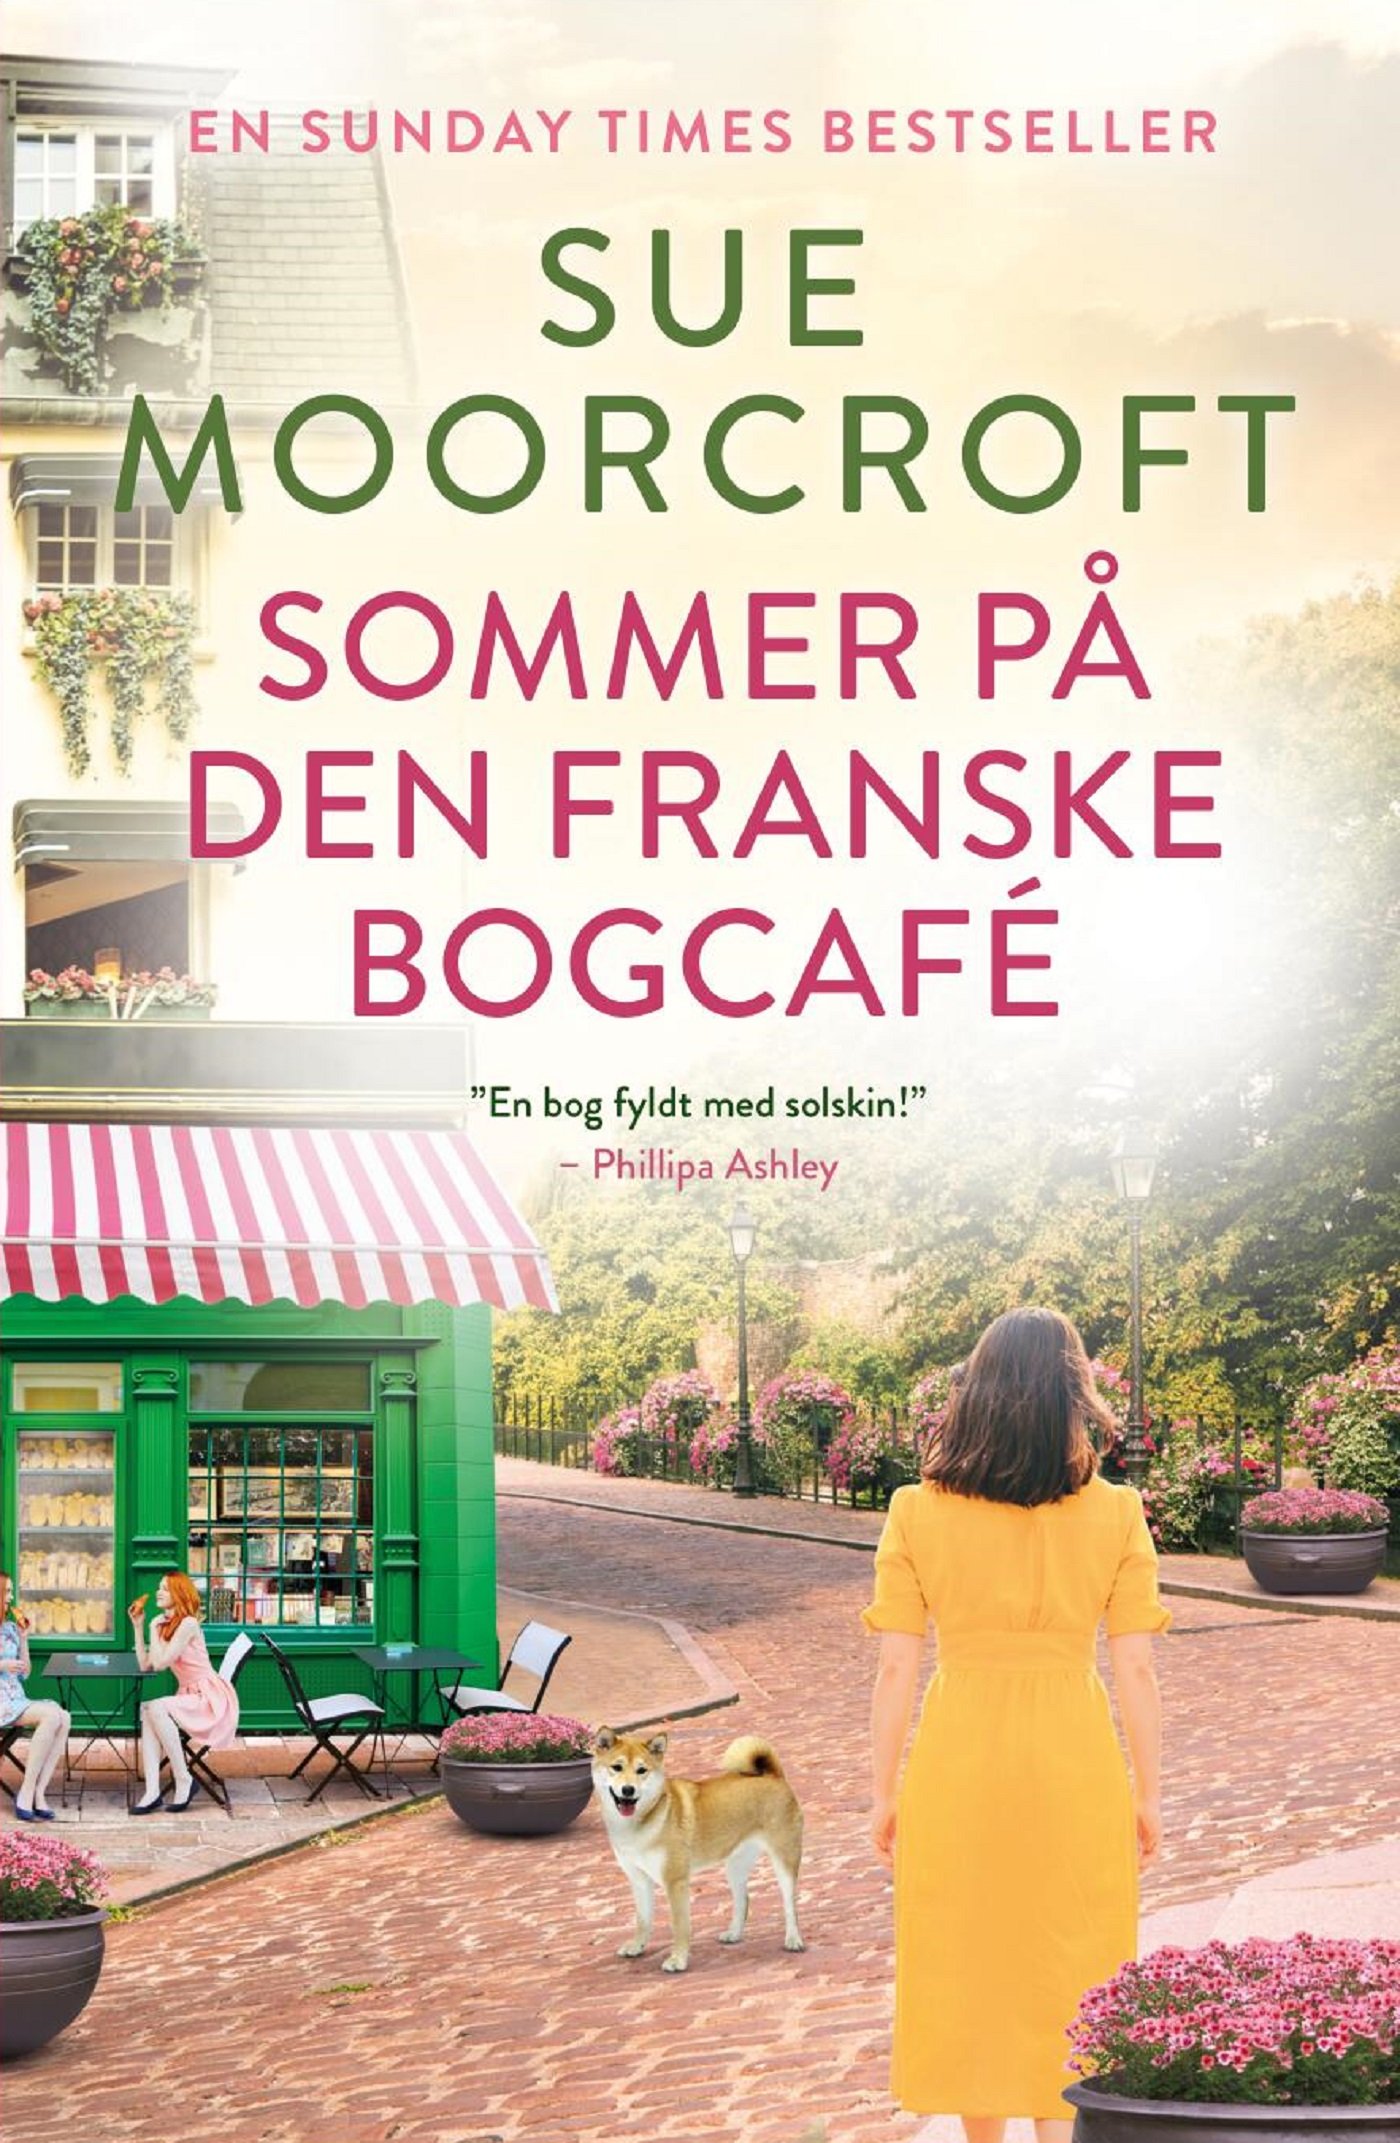 SUMMER AT THE FRENCH CAFE - MOORCROFT, Sue - DENMARK, Zara - cover, FINAL .jpg